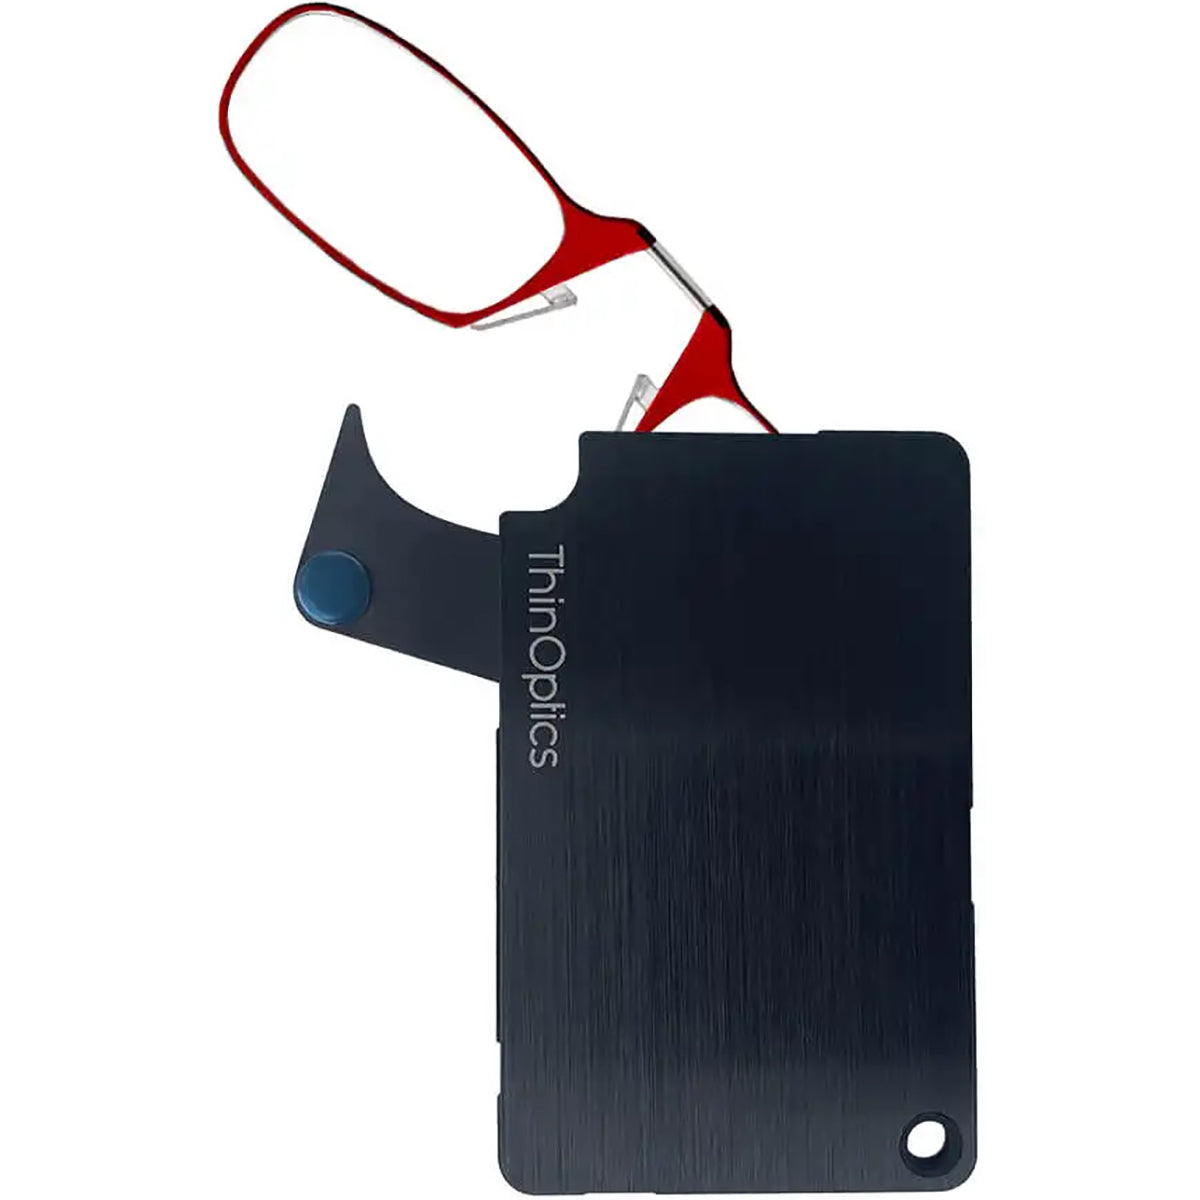 ThinOptics Armless Ultralight Readers with Stainless Steel Wallet ThinOptics